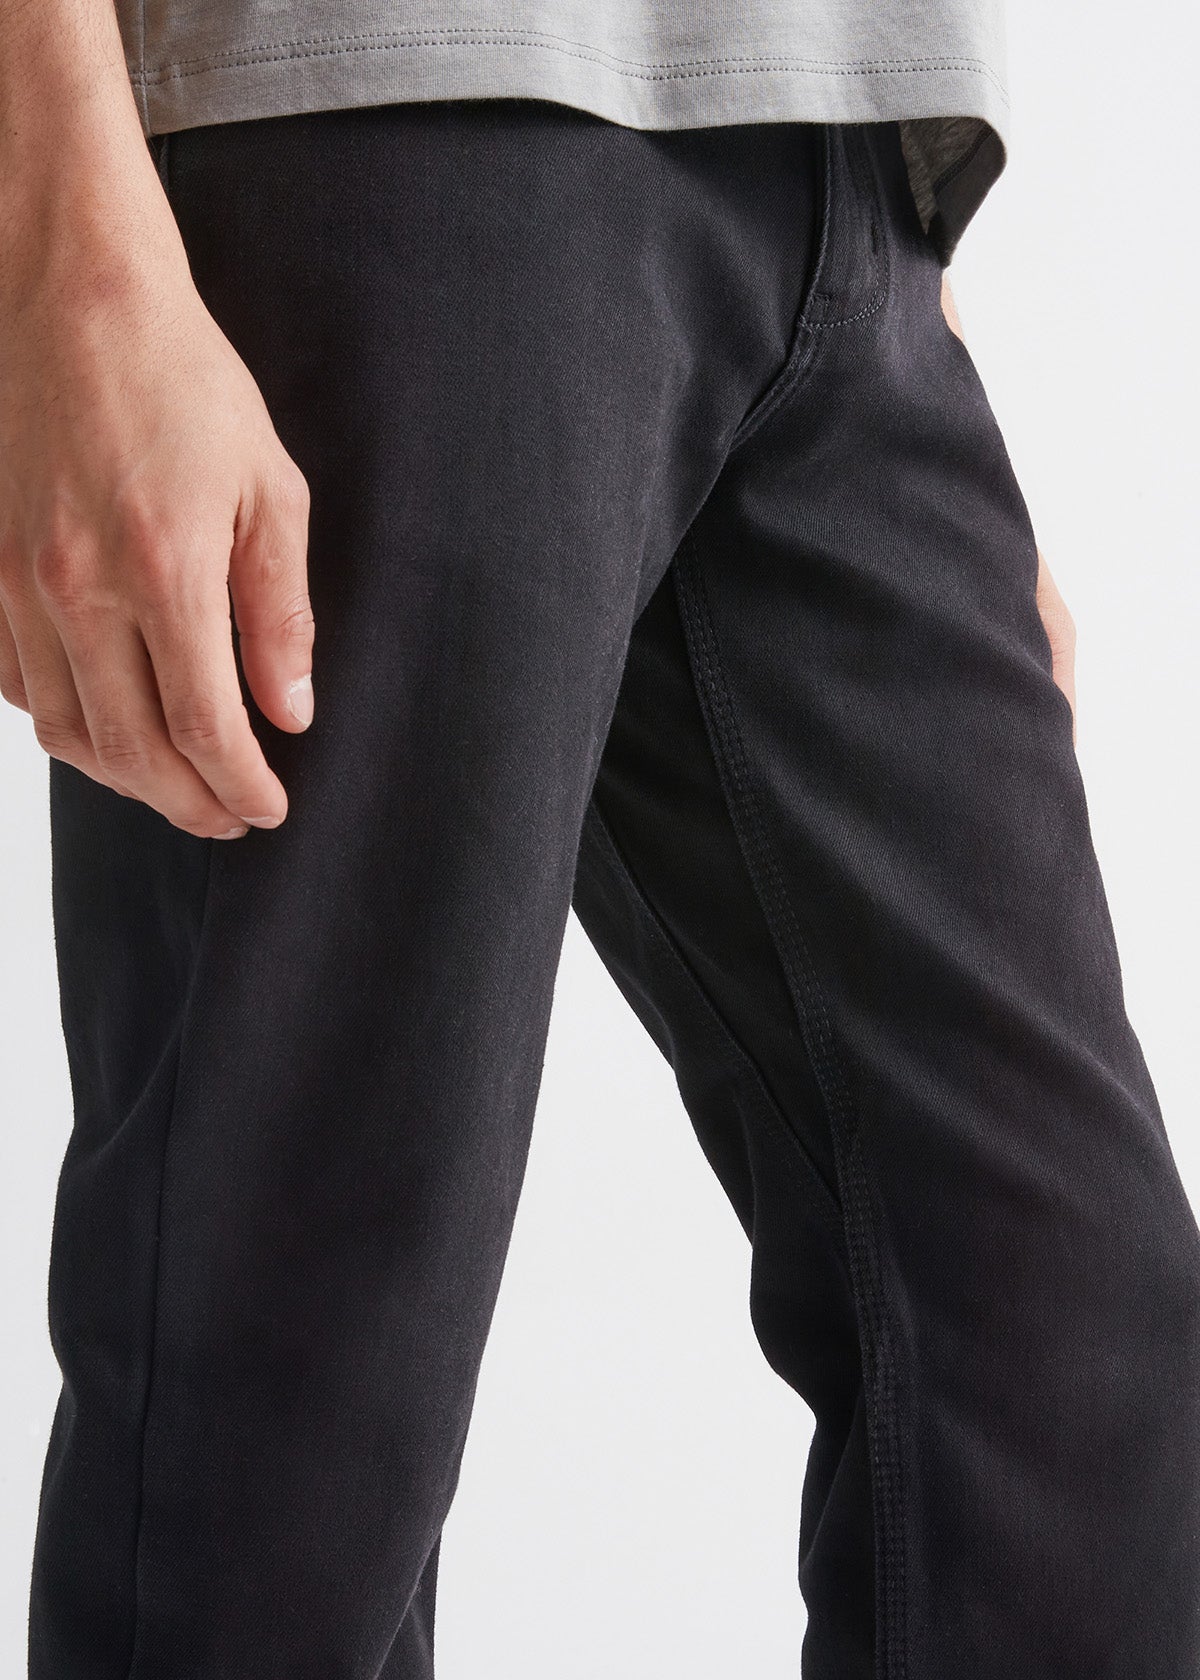 man wearing black slim fit waterproof stretch jeans gusset detail